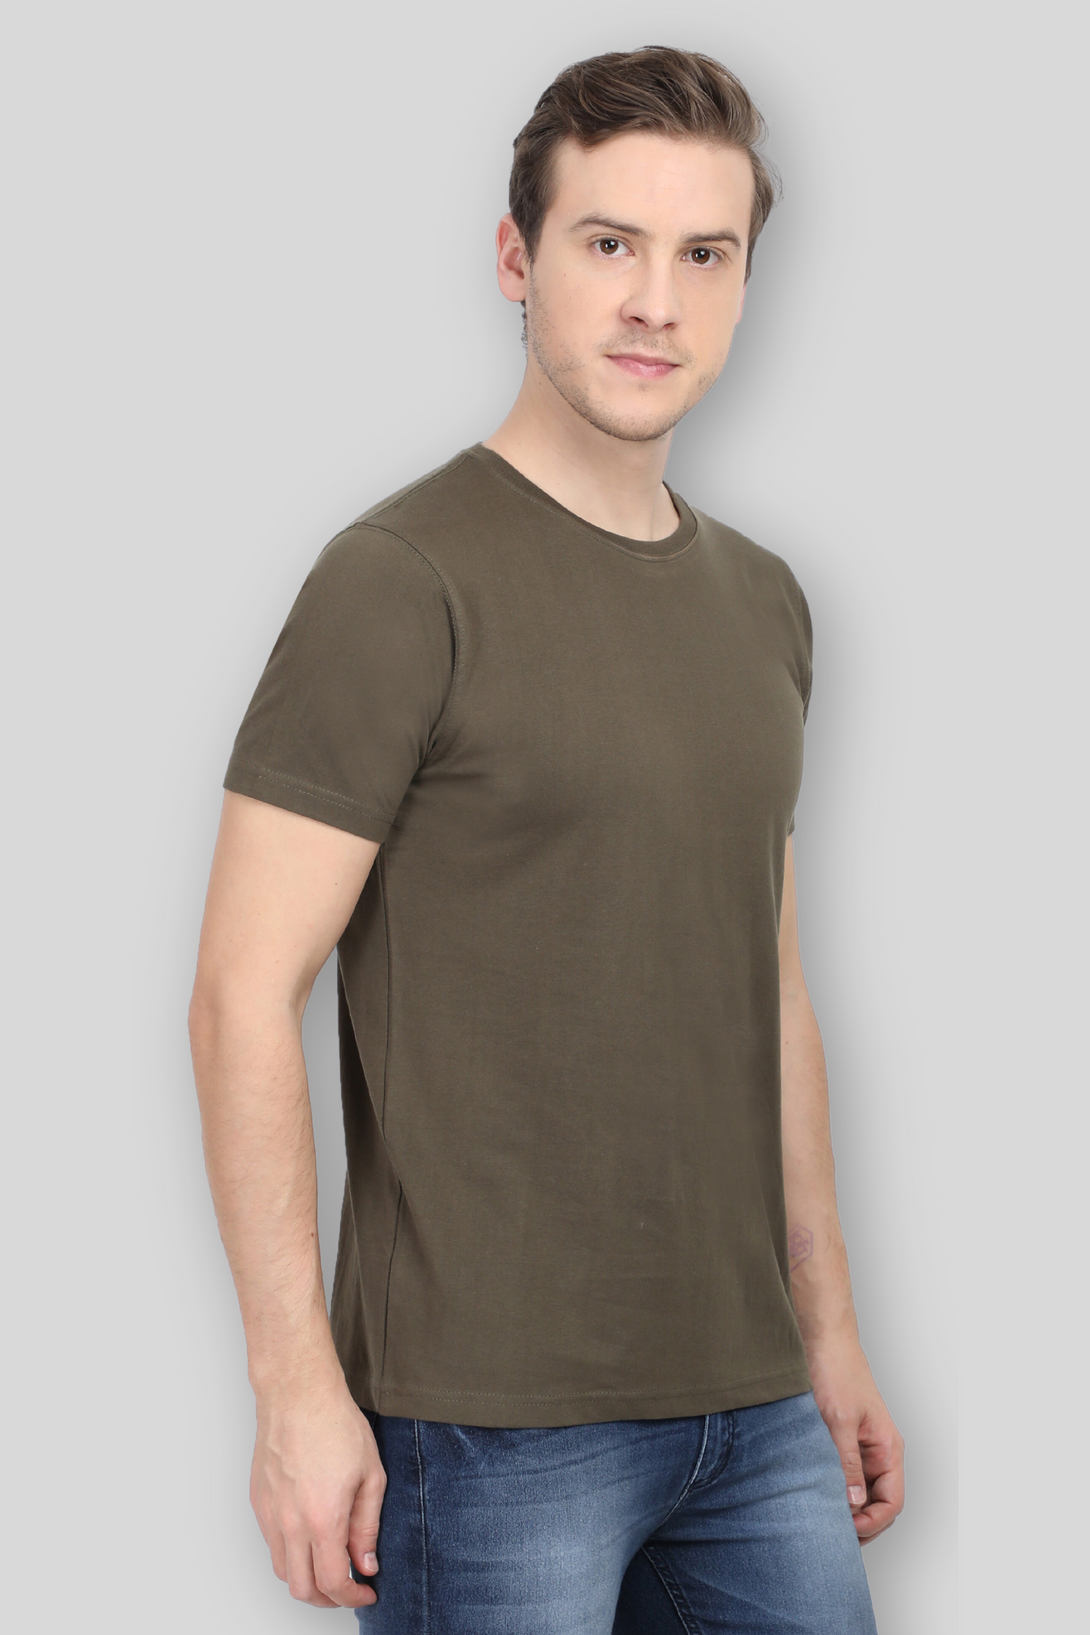 Olive Green T-Shirt For Men - WowWaves - 3